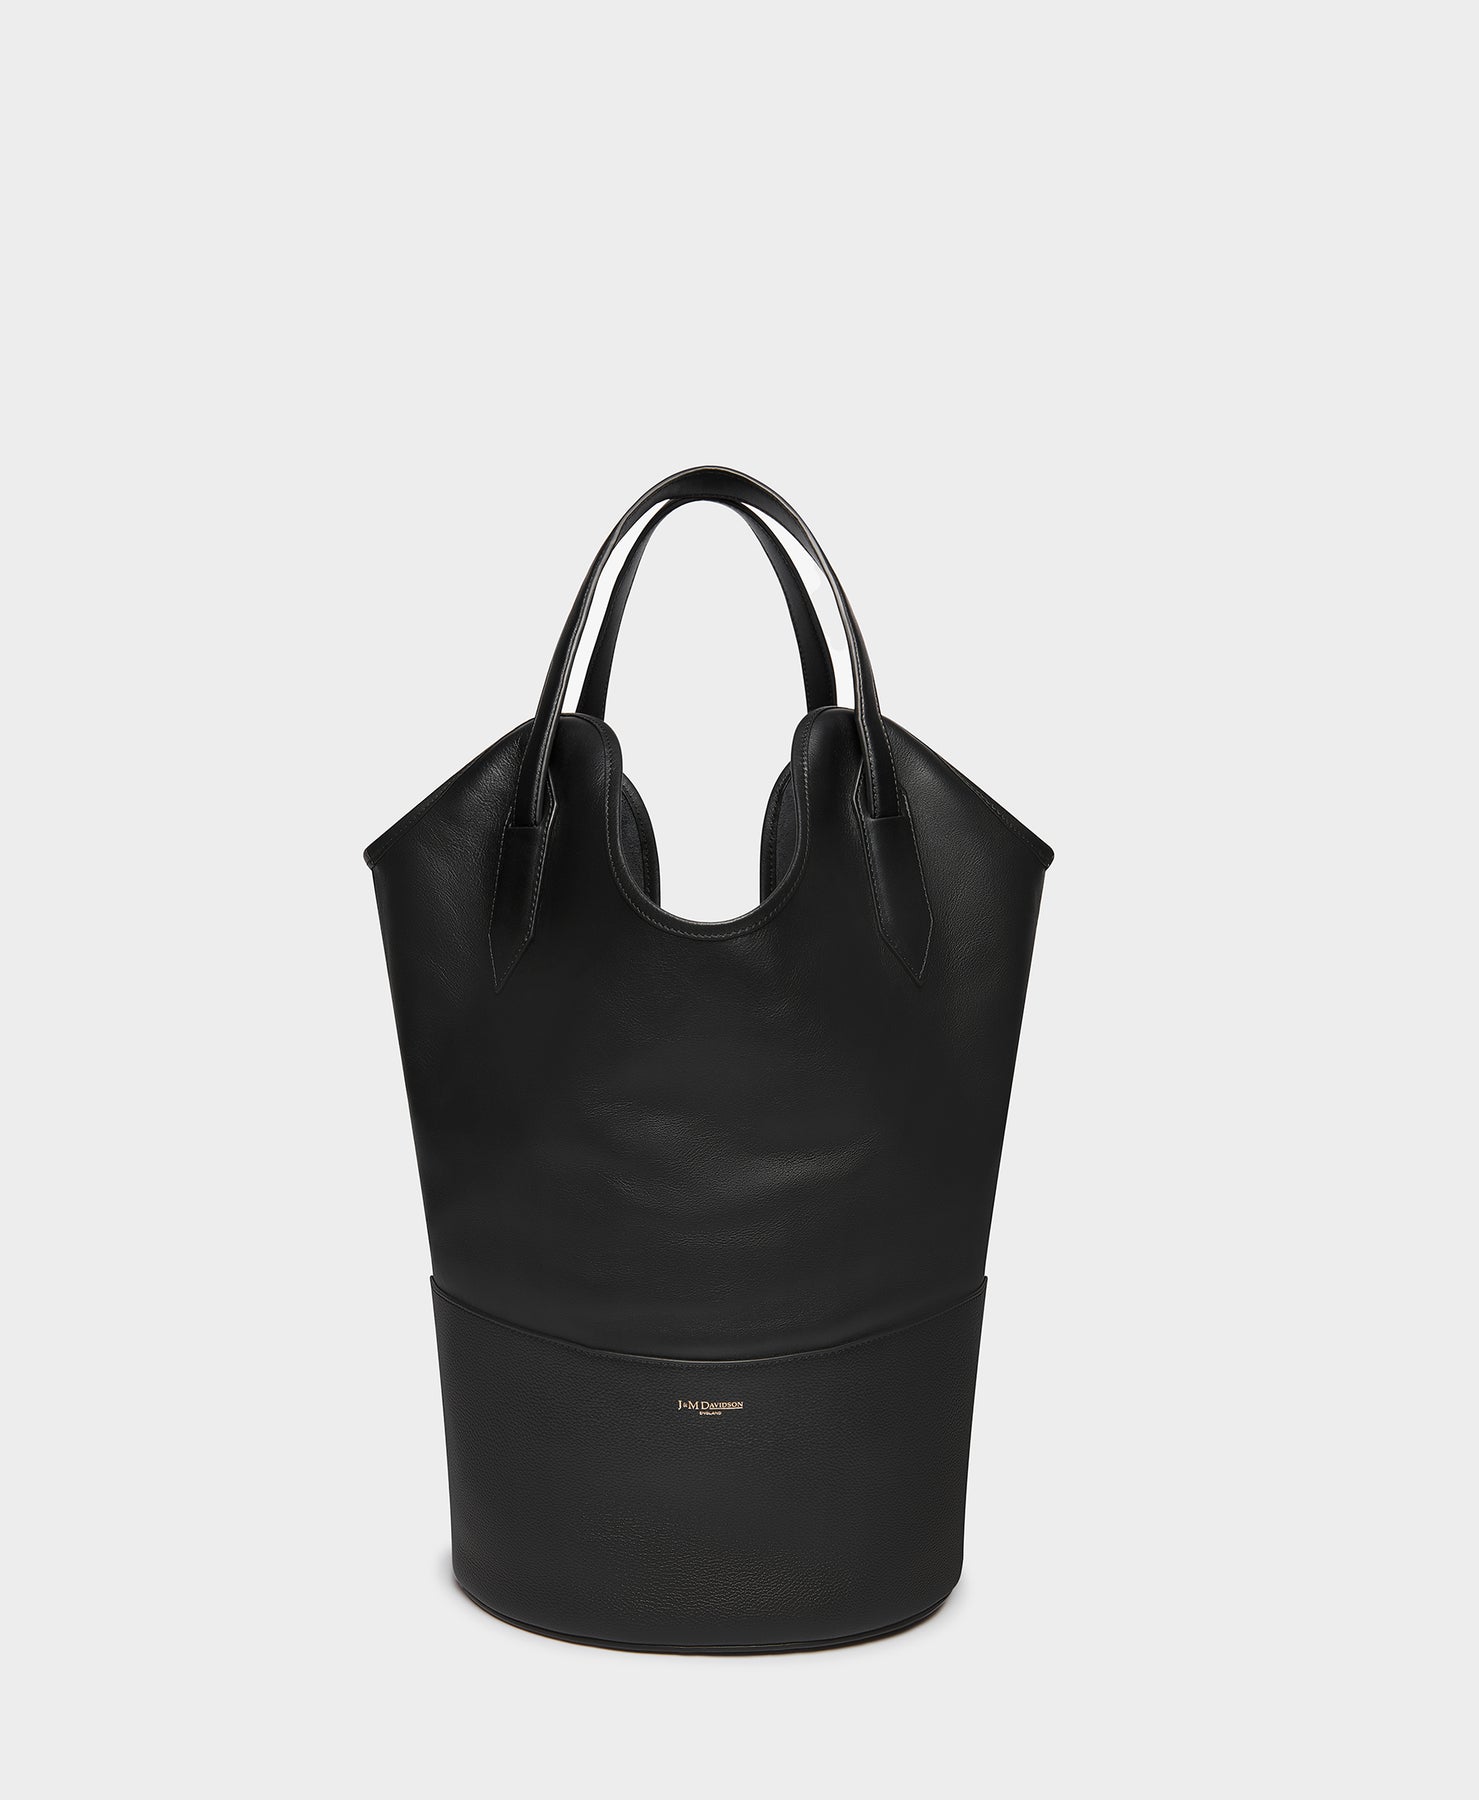 Designer Leather Bags for Ladies | Ju0026M Davidson